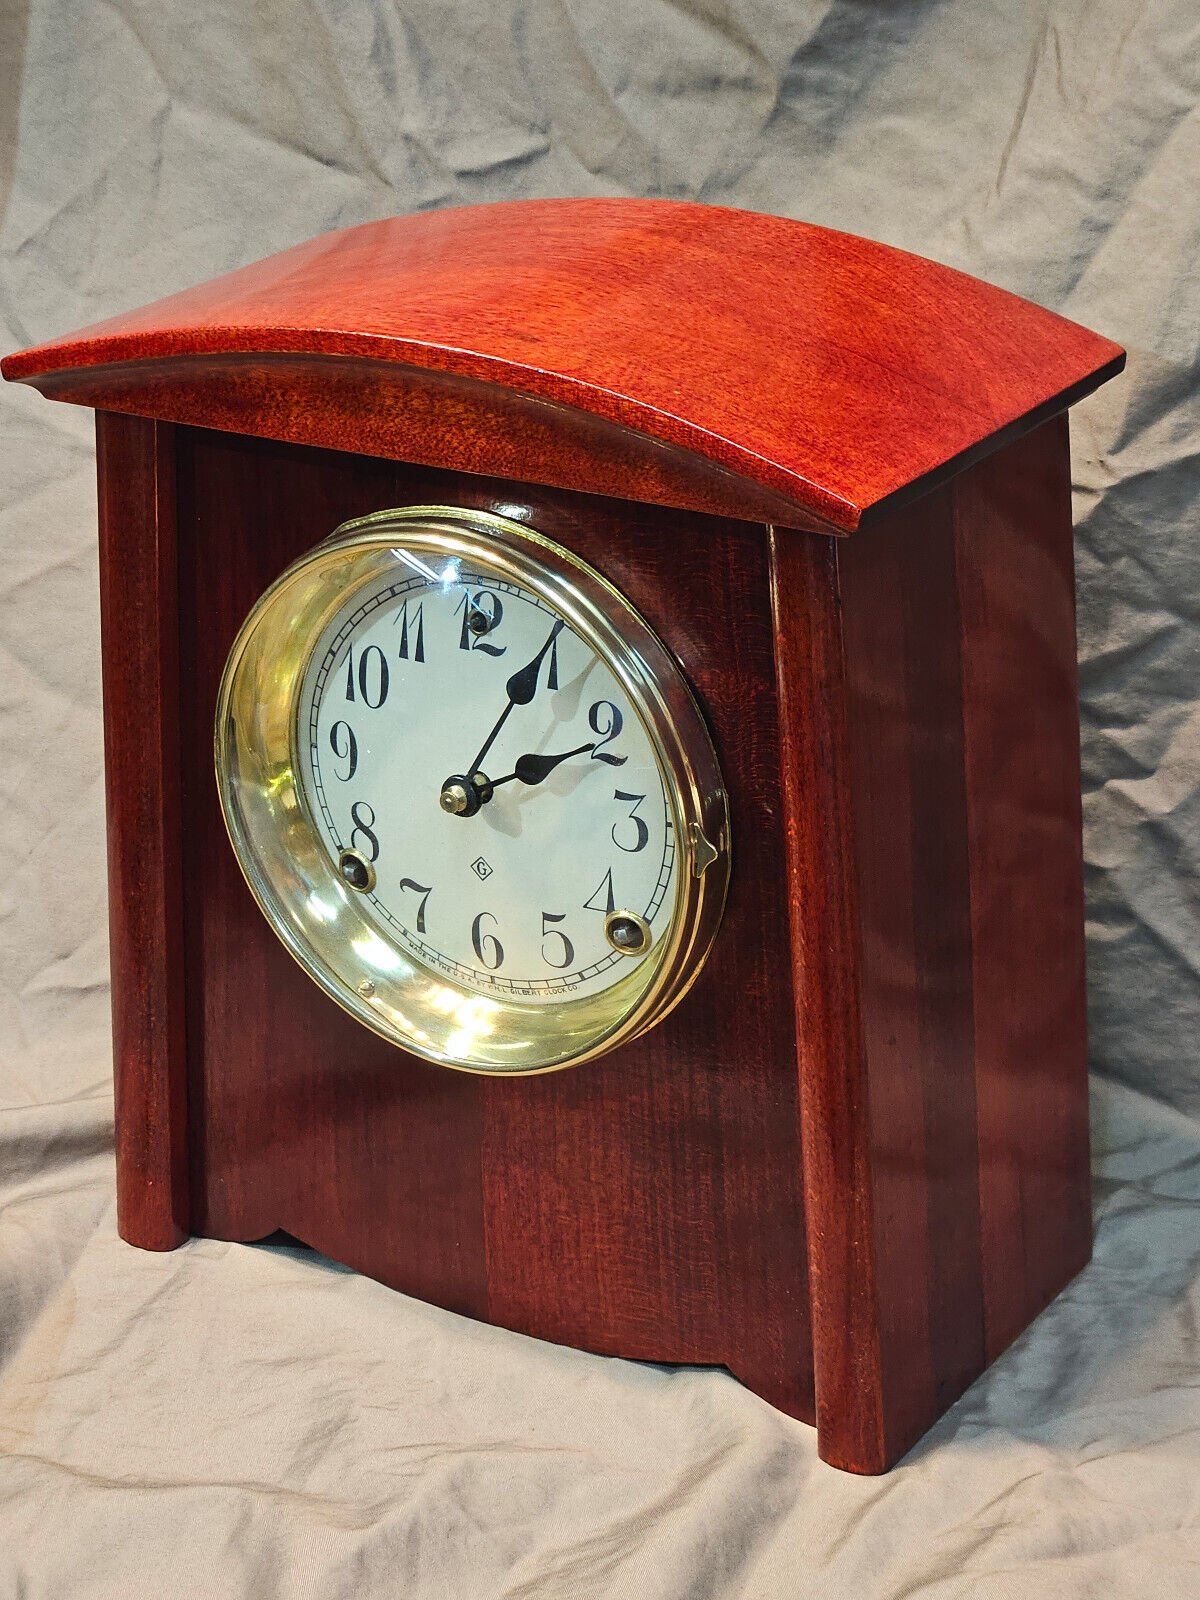 Gilbert Red Mahogany Antique Mission Mantel Clock circa 1913 Movement Restored